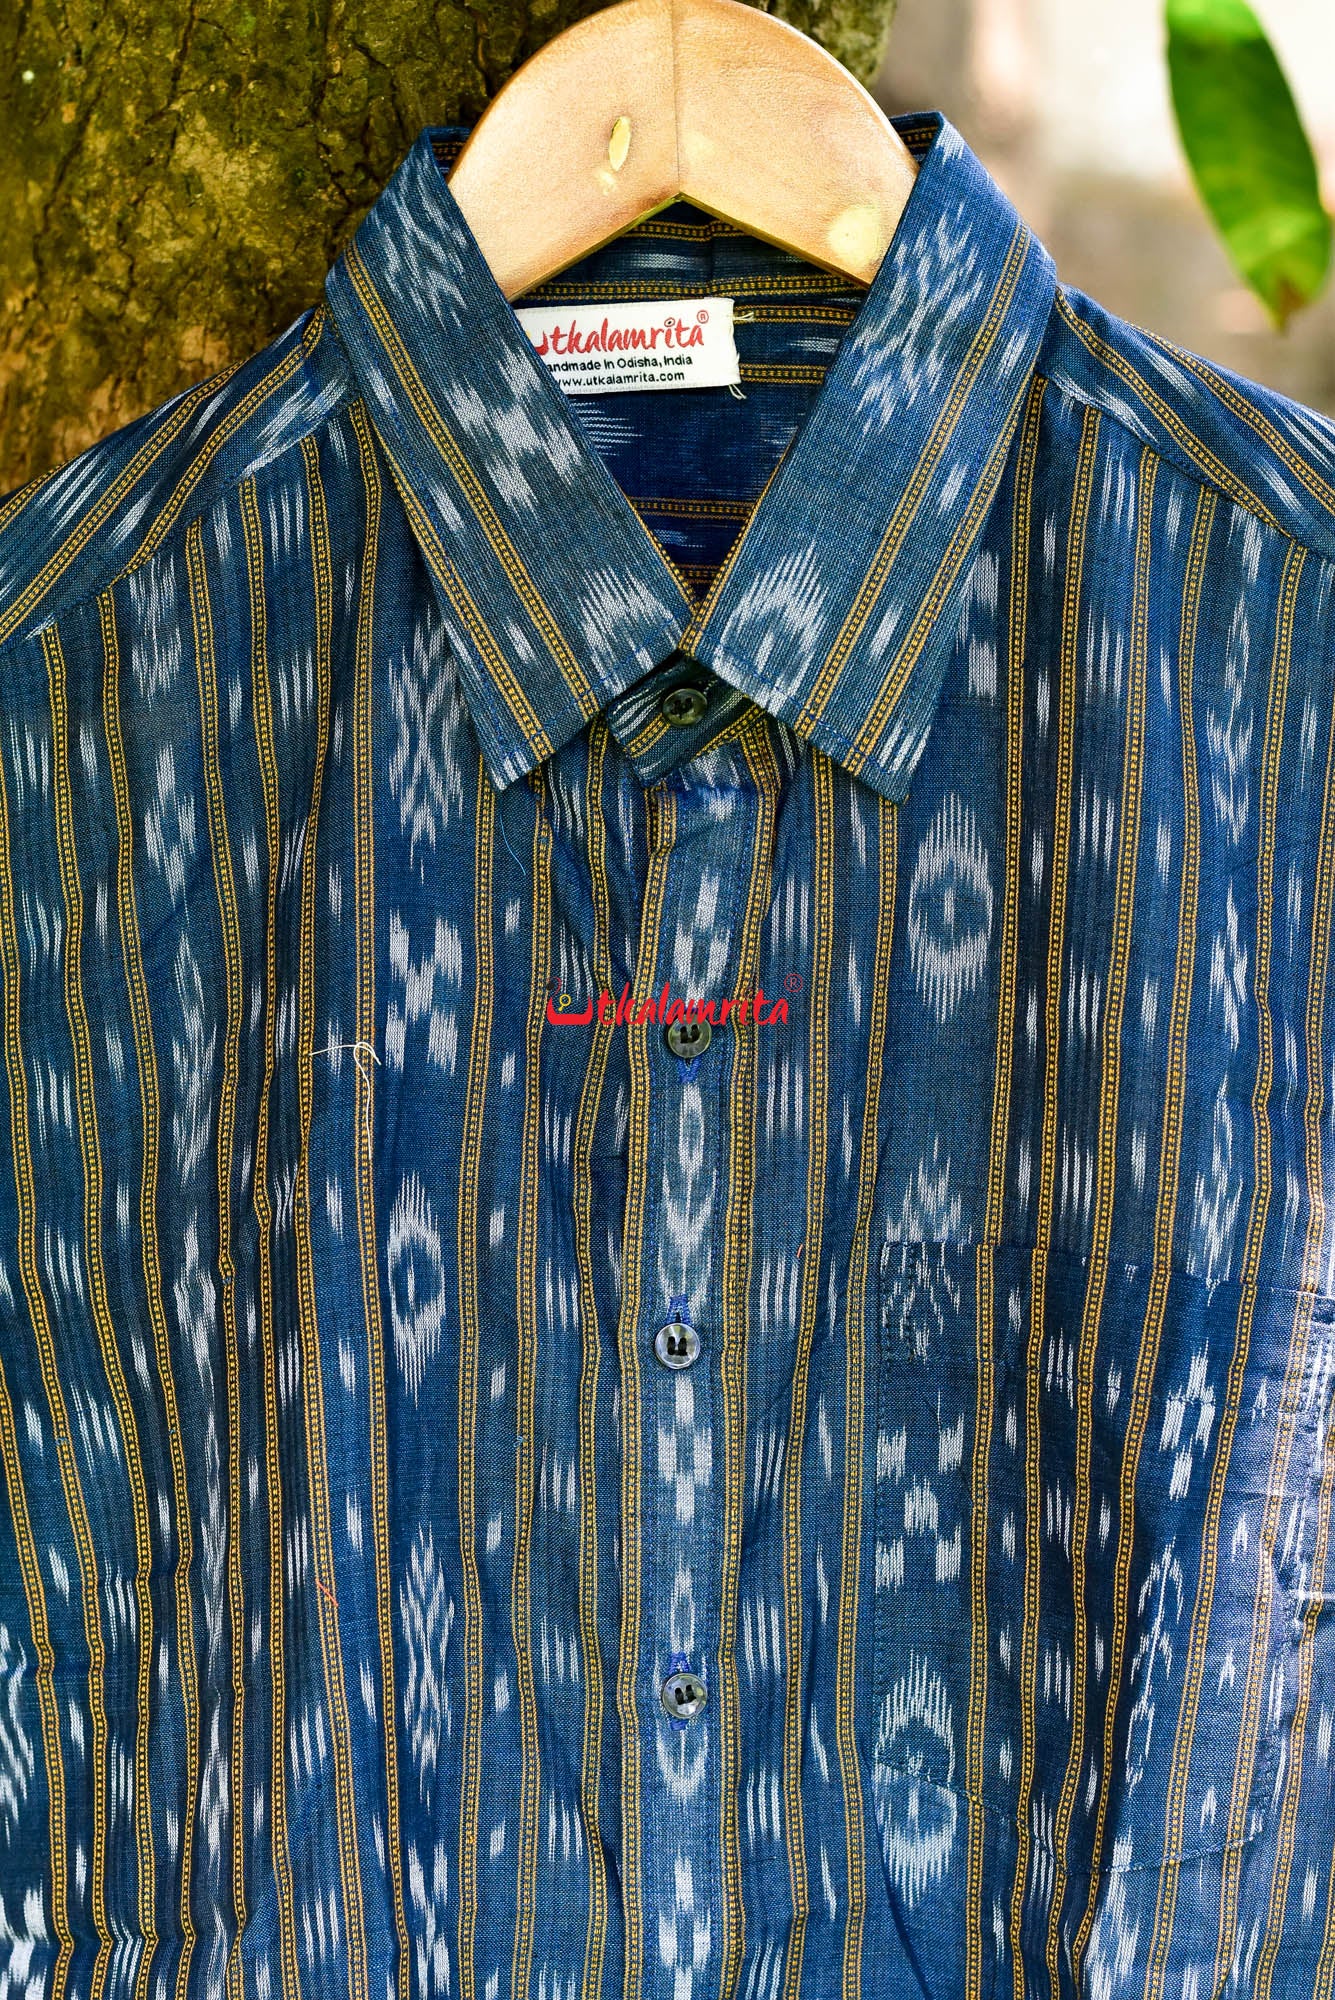 Blue Ikat (Half Shirt)